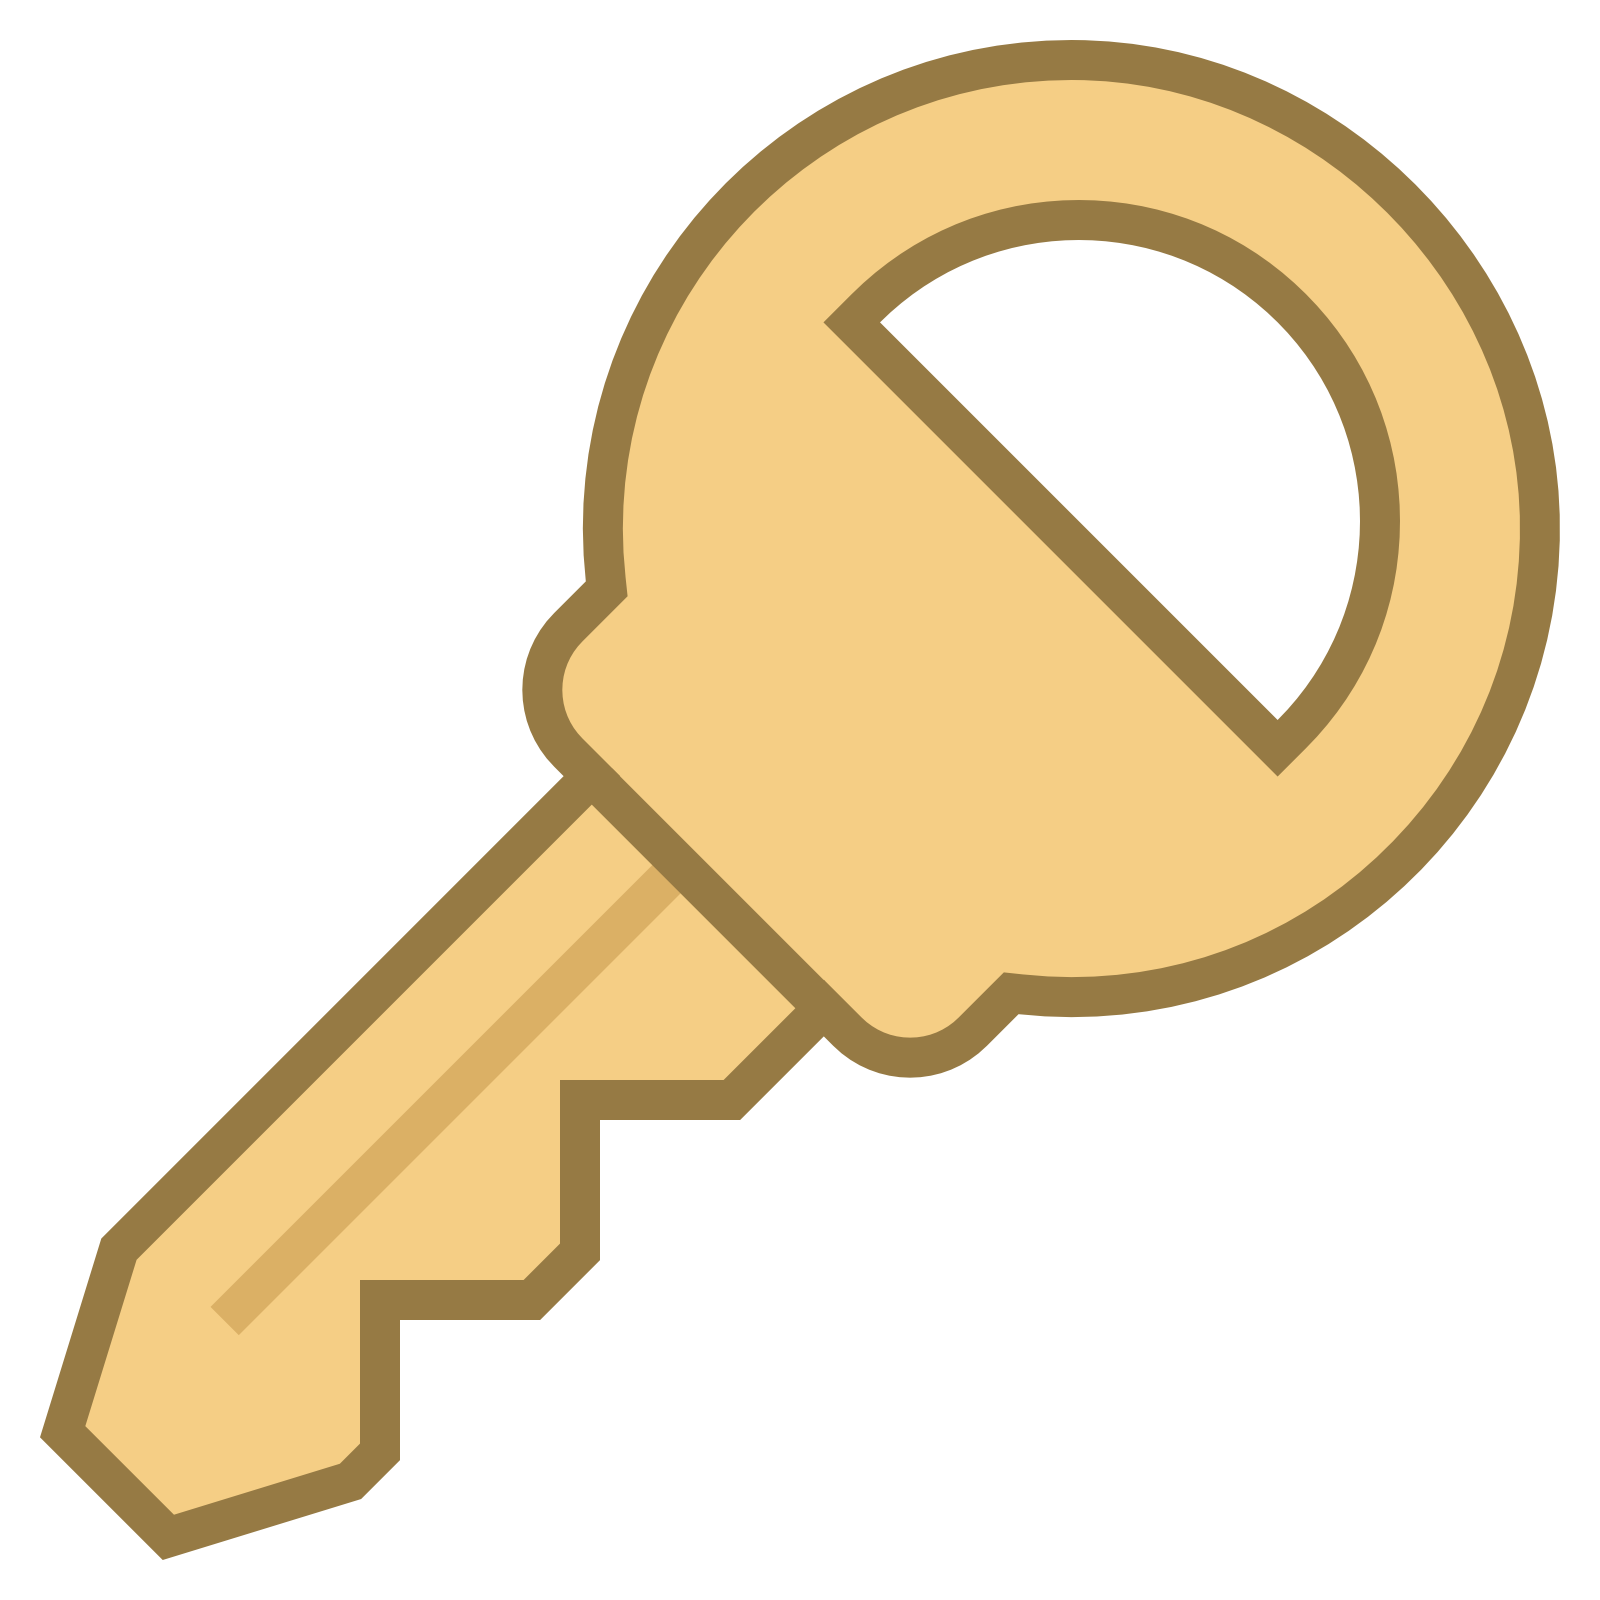 keys clipart icon